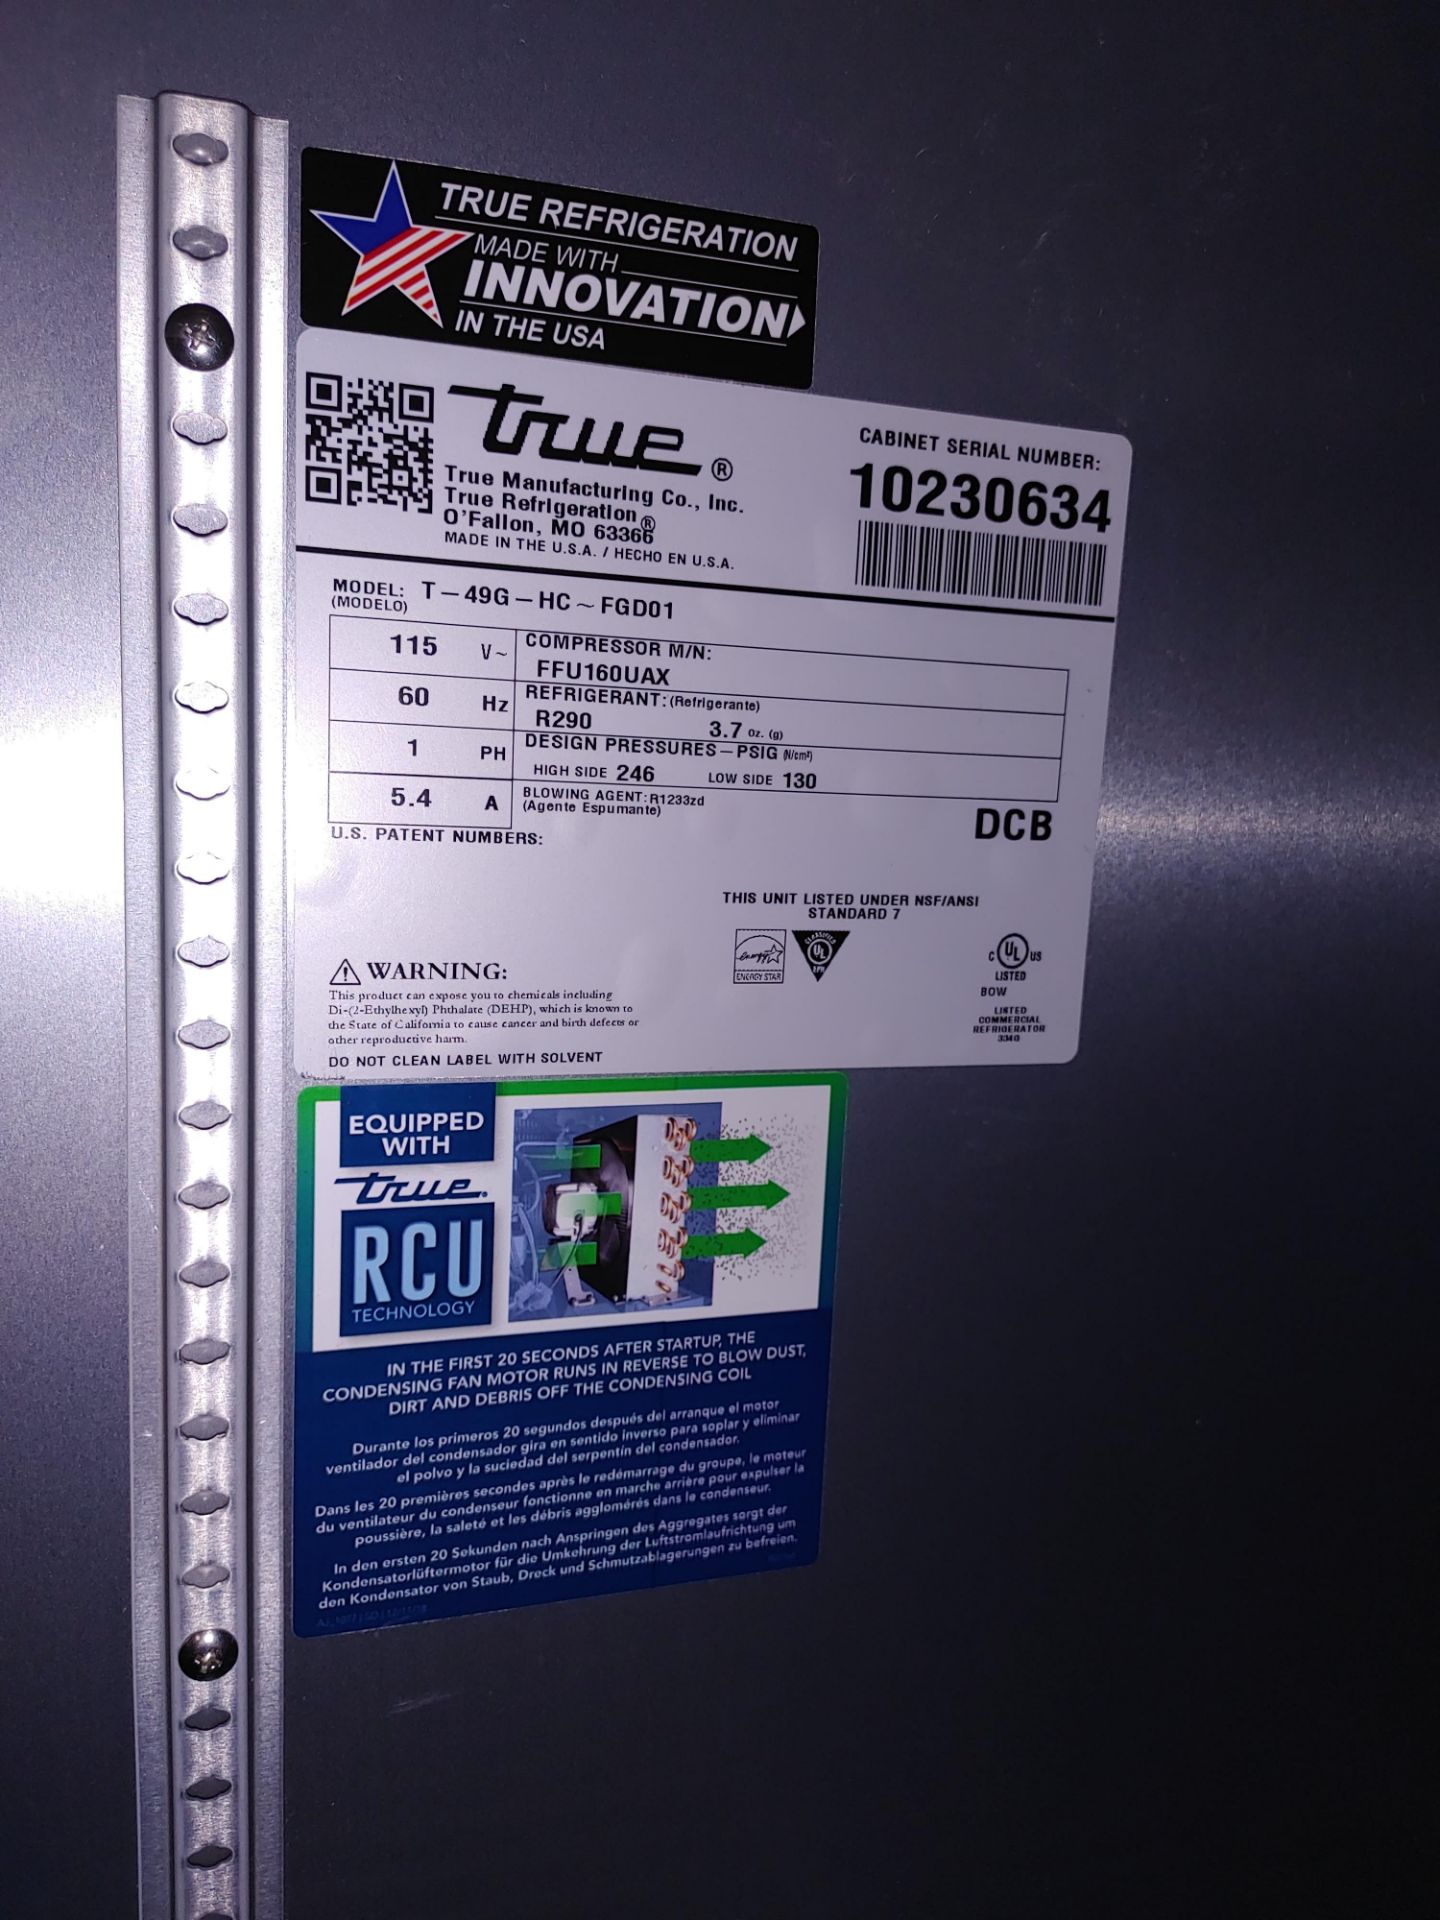 True "T-49G-HC-FGD01" 2 Door Glass Front Refrigerator S/N 10230634 - Image 2 of 2